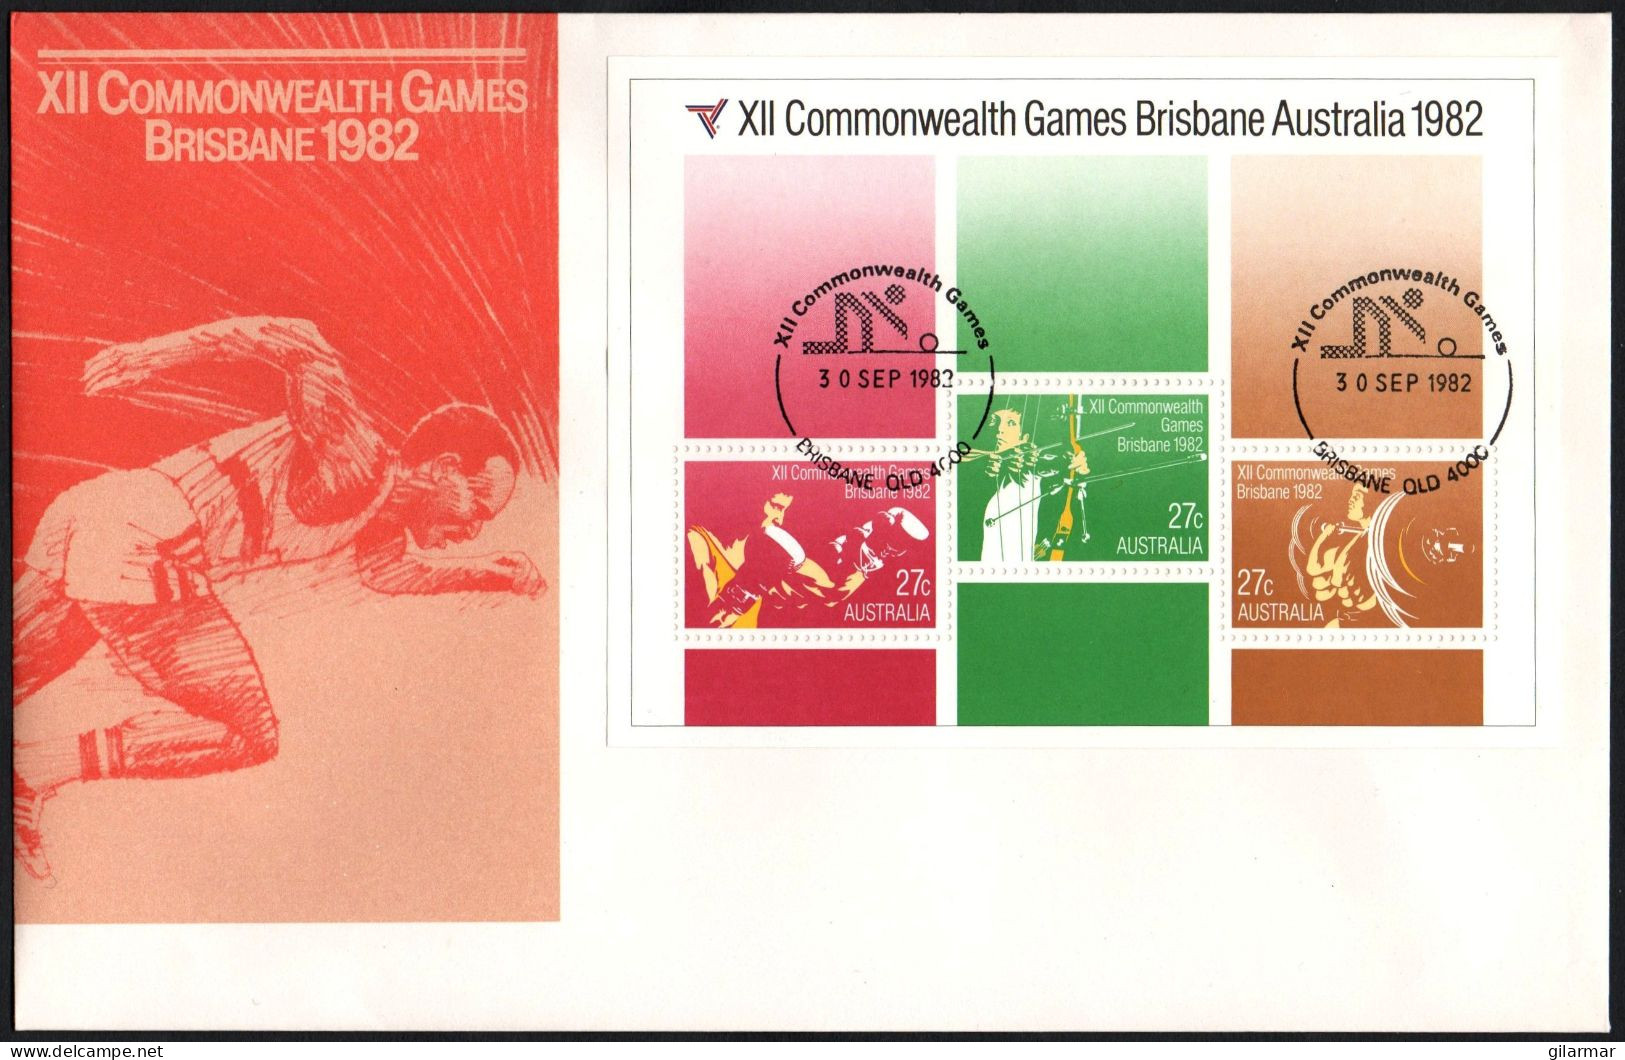 AUSTRALIA BRISBANE 1982 - XII COMMONWEALTH GAMES - SHEET - BOWLS POSTMARK - G - Petanque